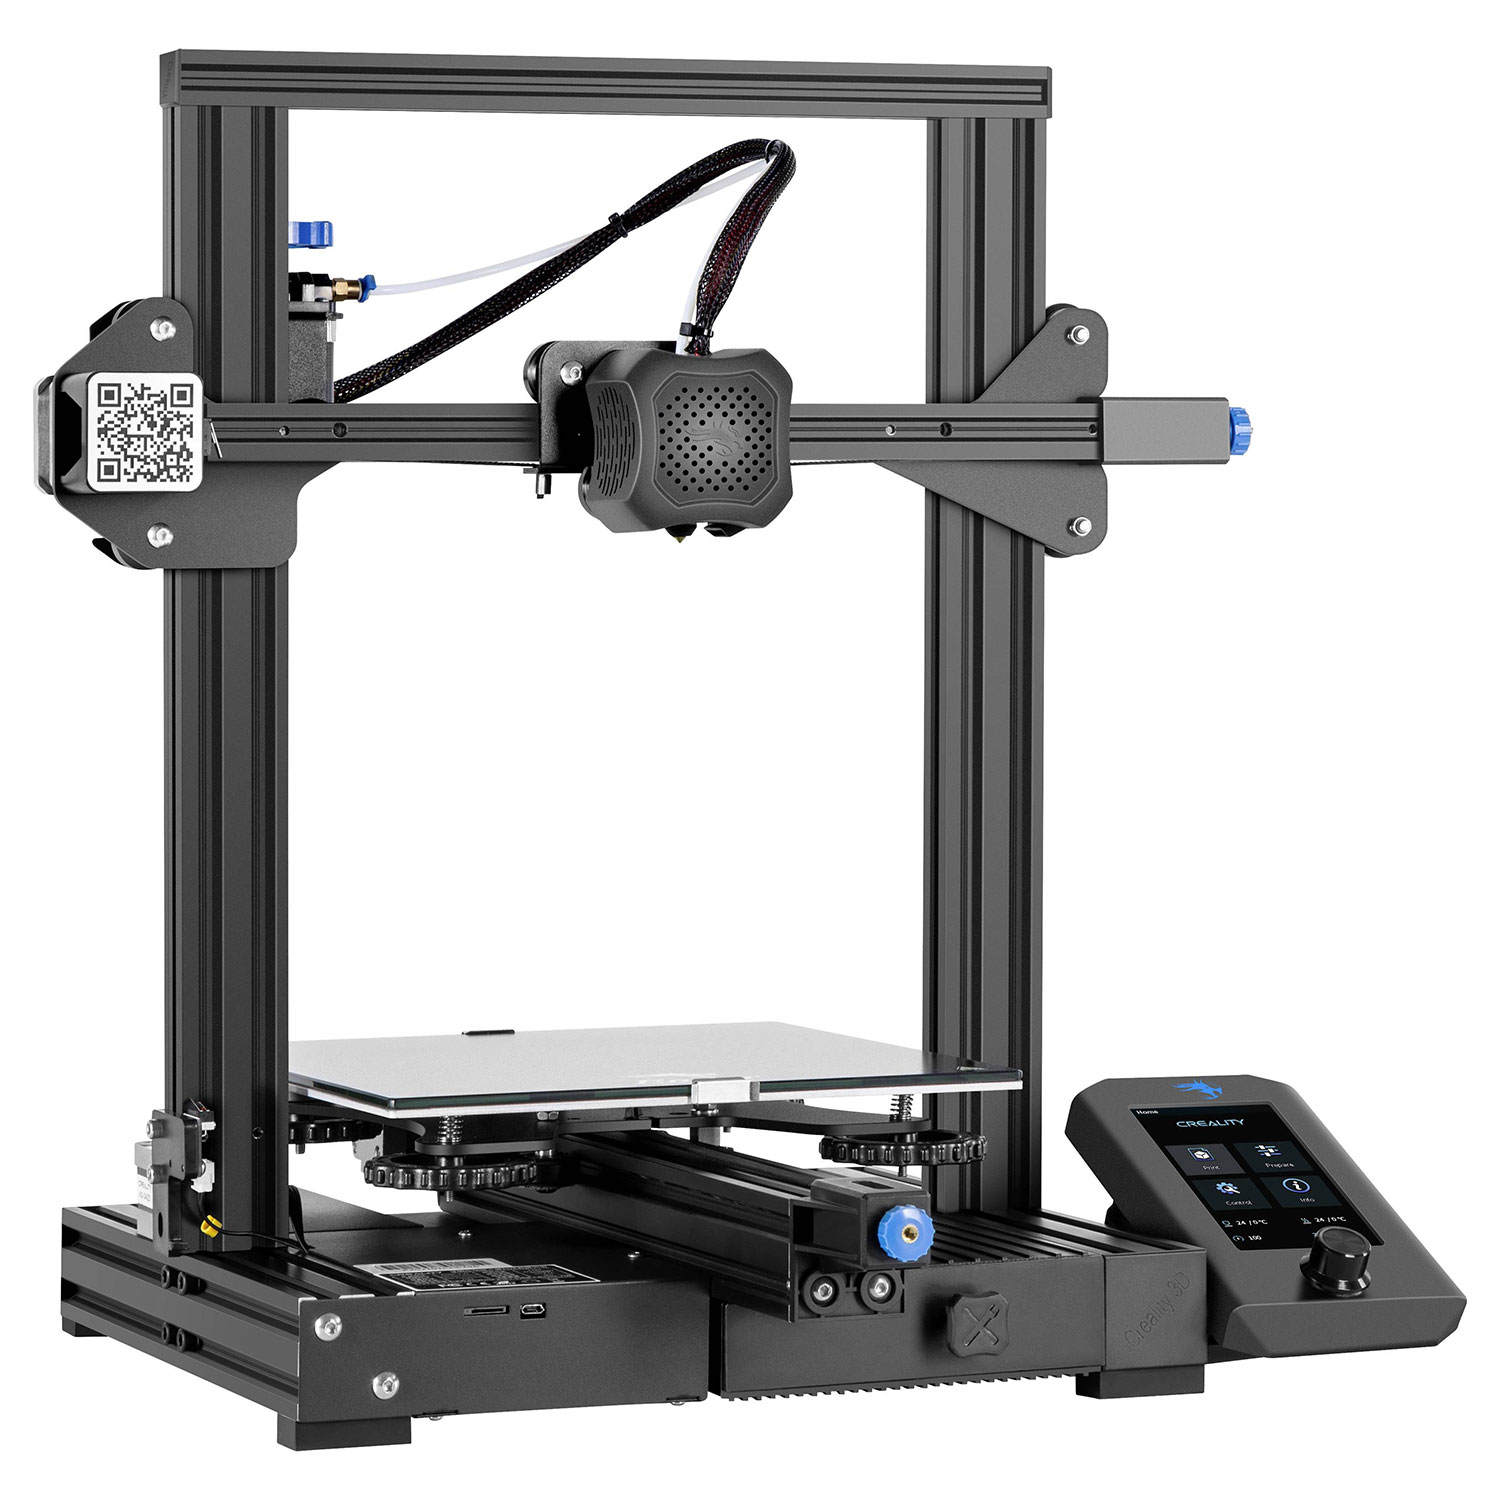 Impressora 3D Creality Ender-3 V2 (220 x 220 x 250MM)